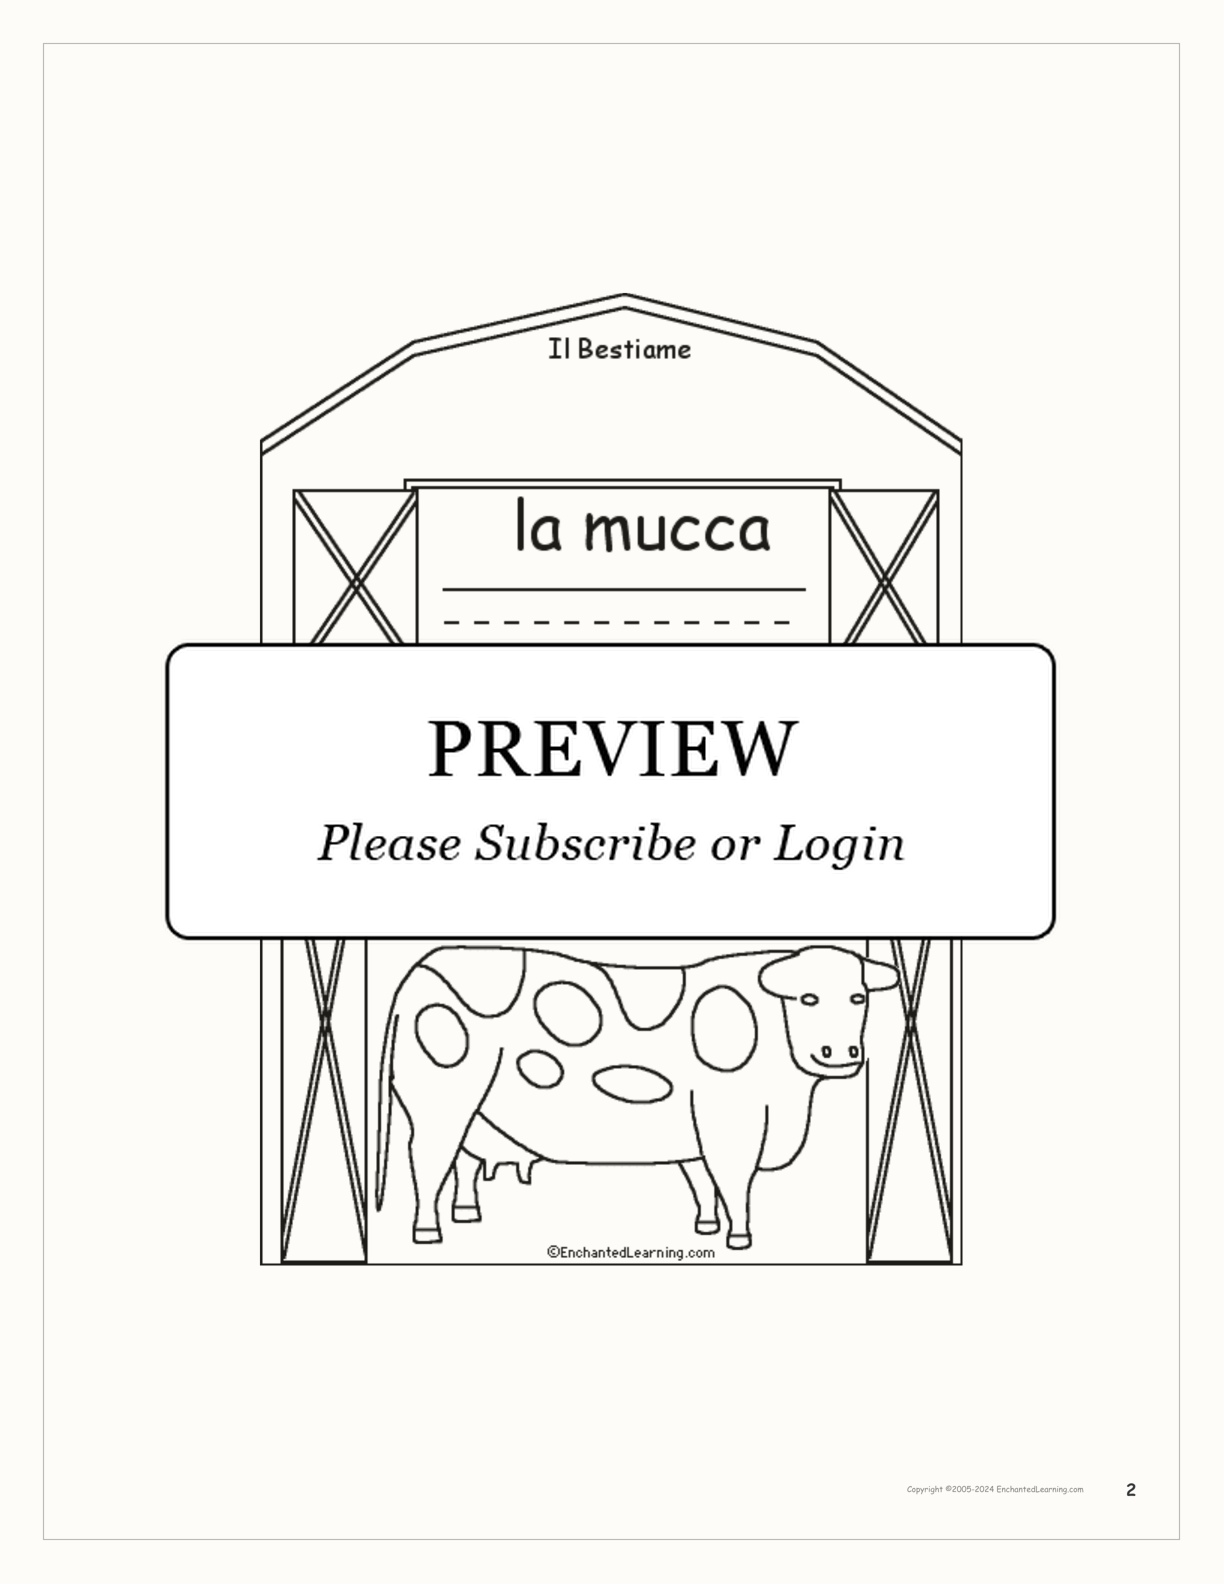 Bestiame/Livestock Italian Book interactive printout page 2